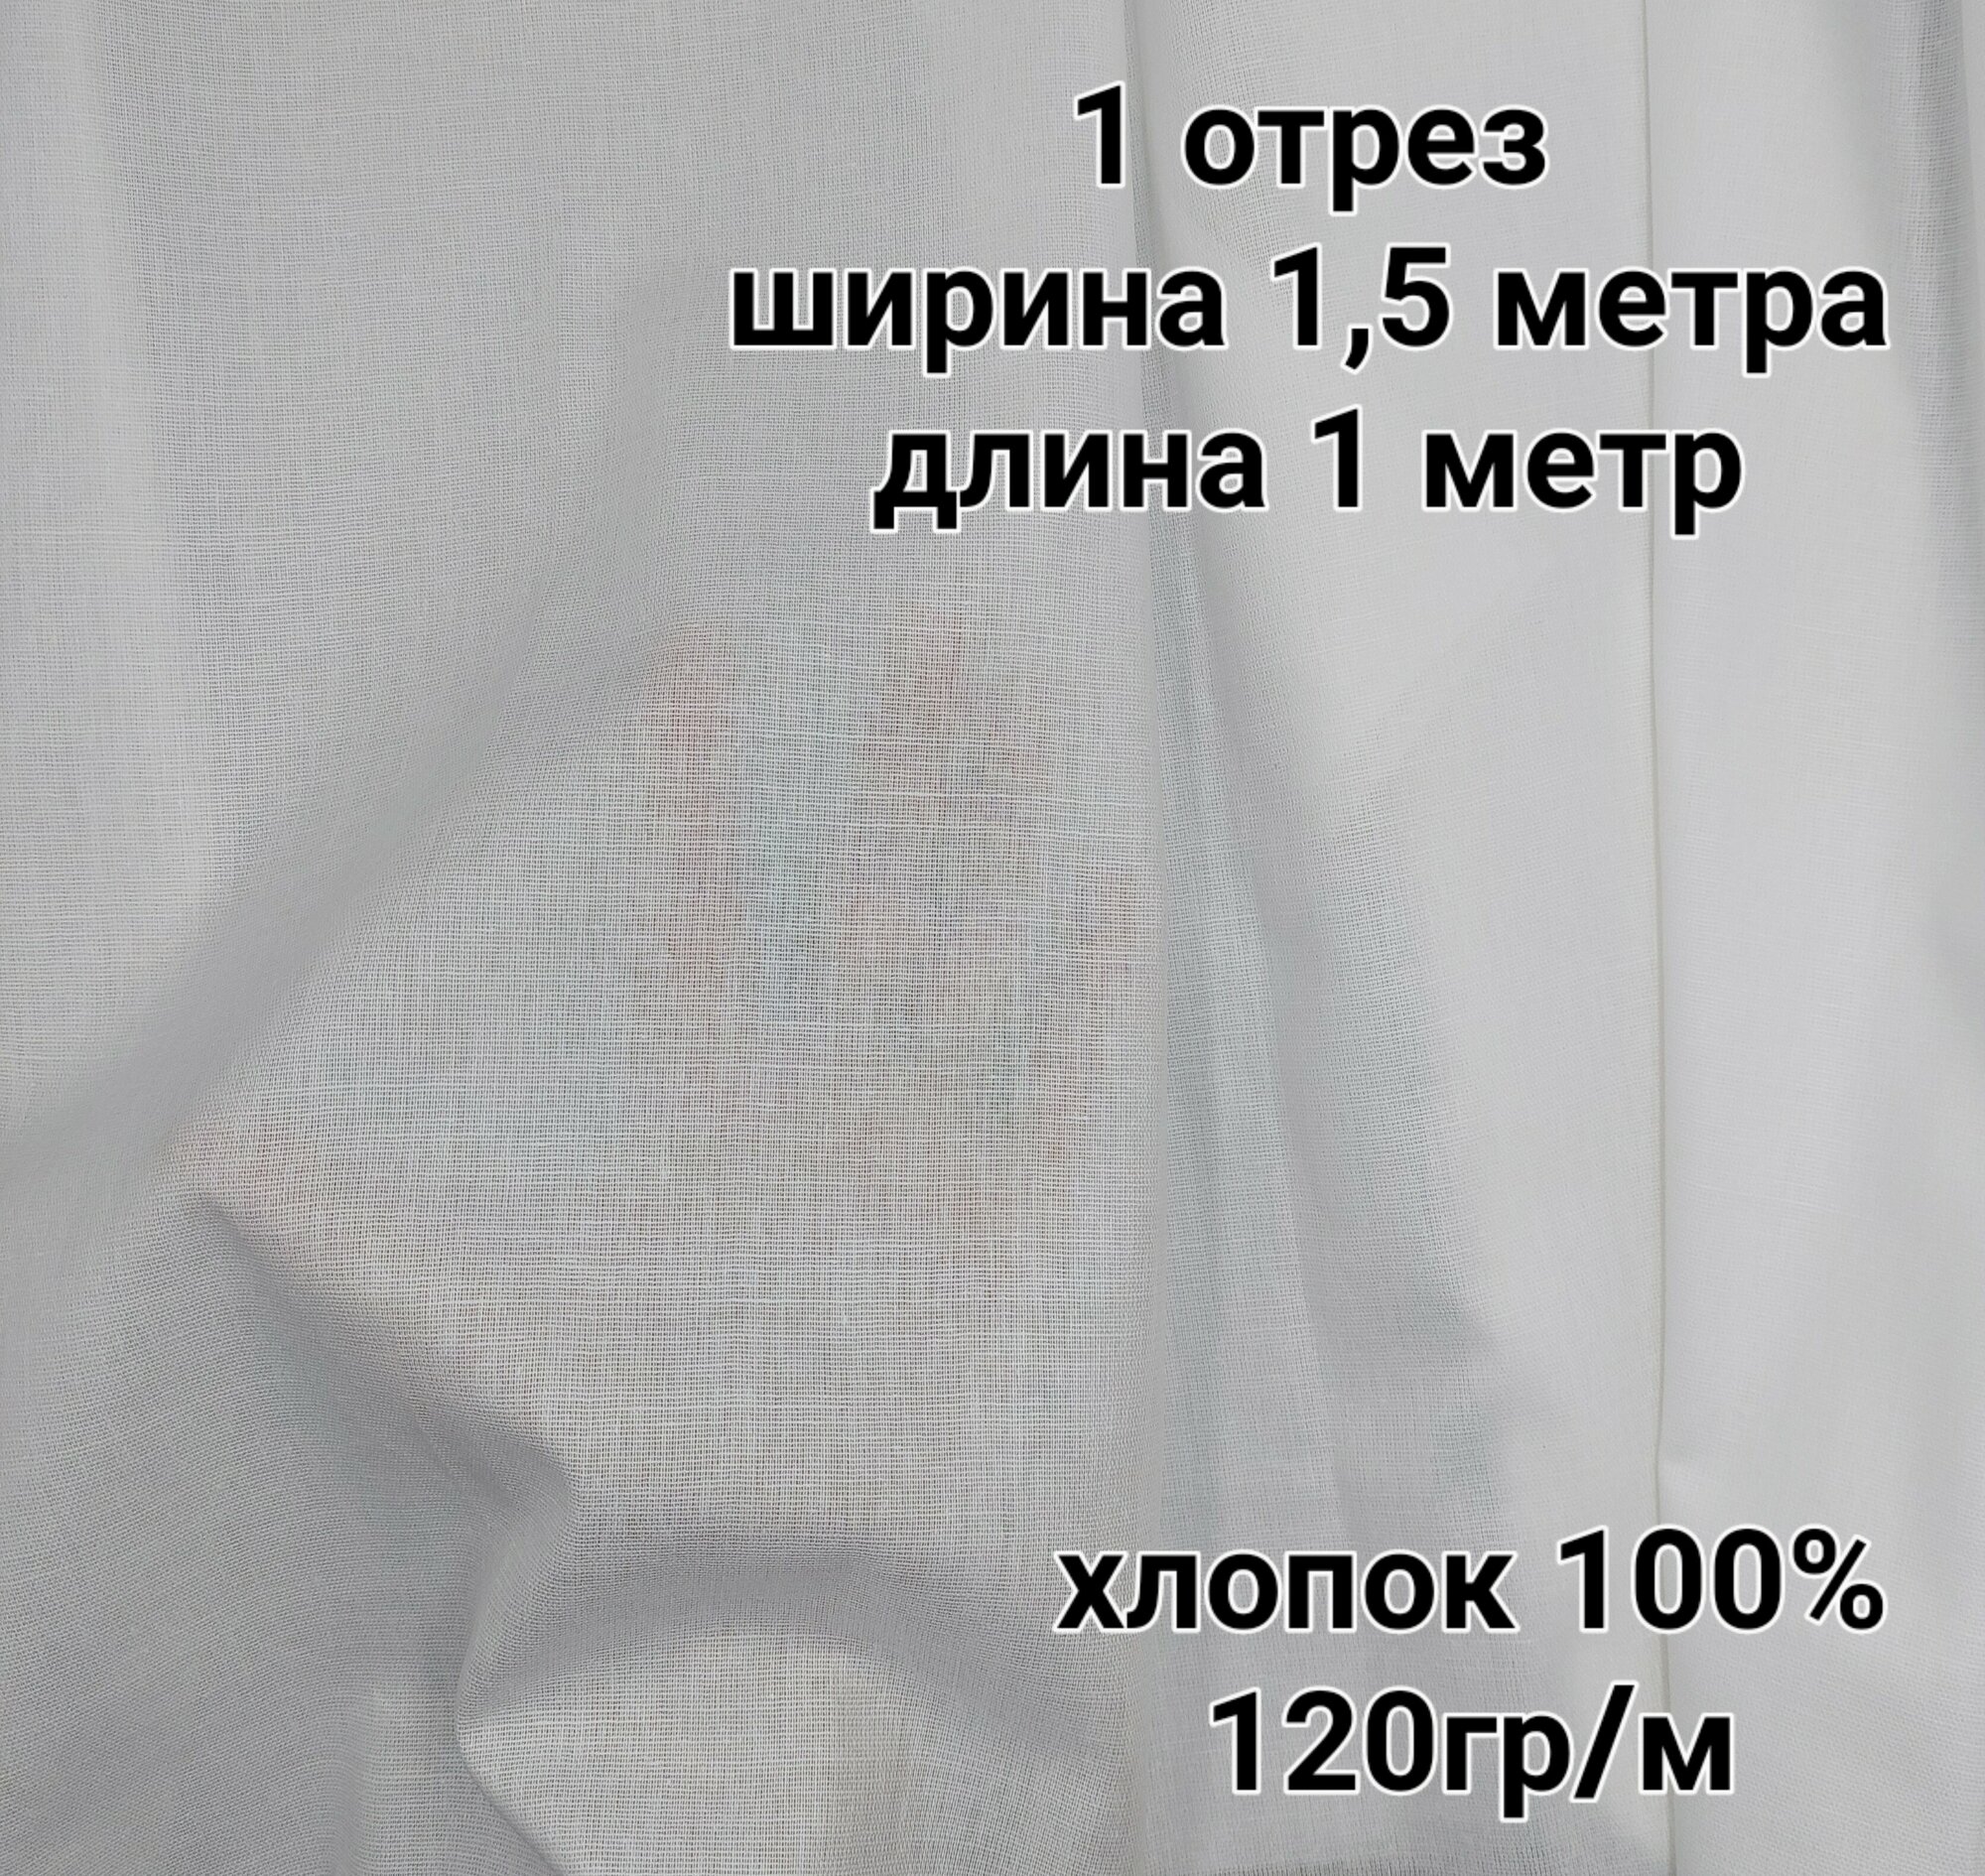 Ткань бязь отбеленная для рукоделия, шитья, 1 отрез - 1м х 1,5м